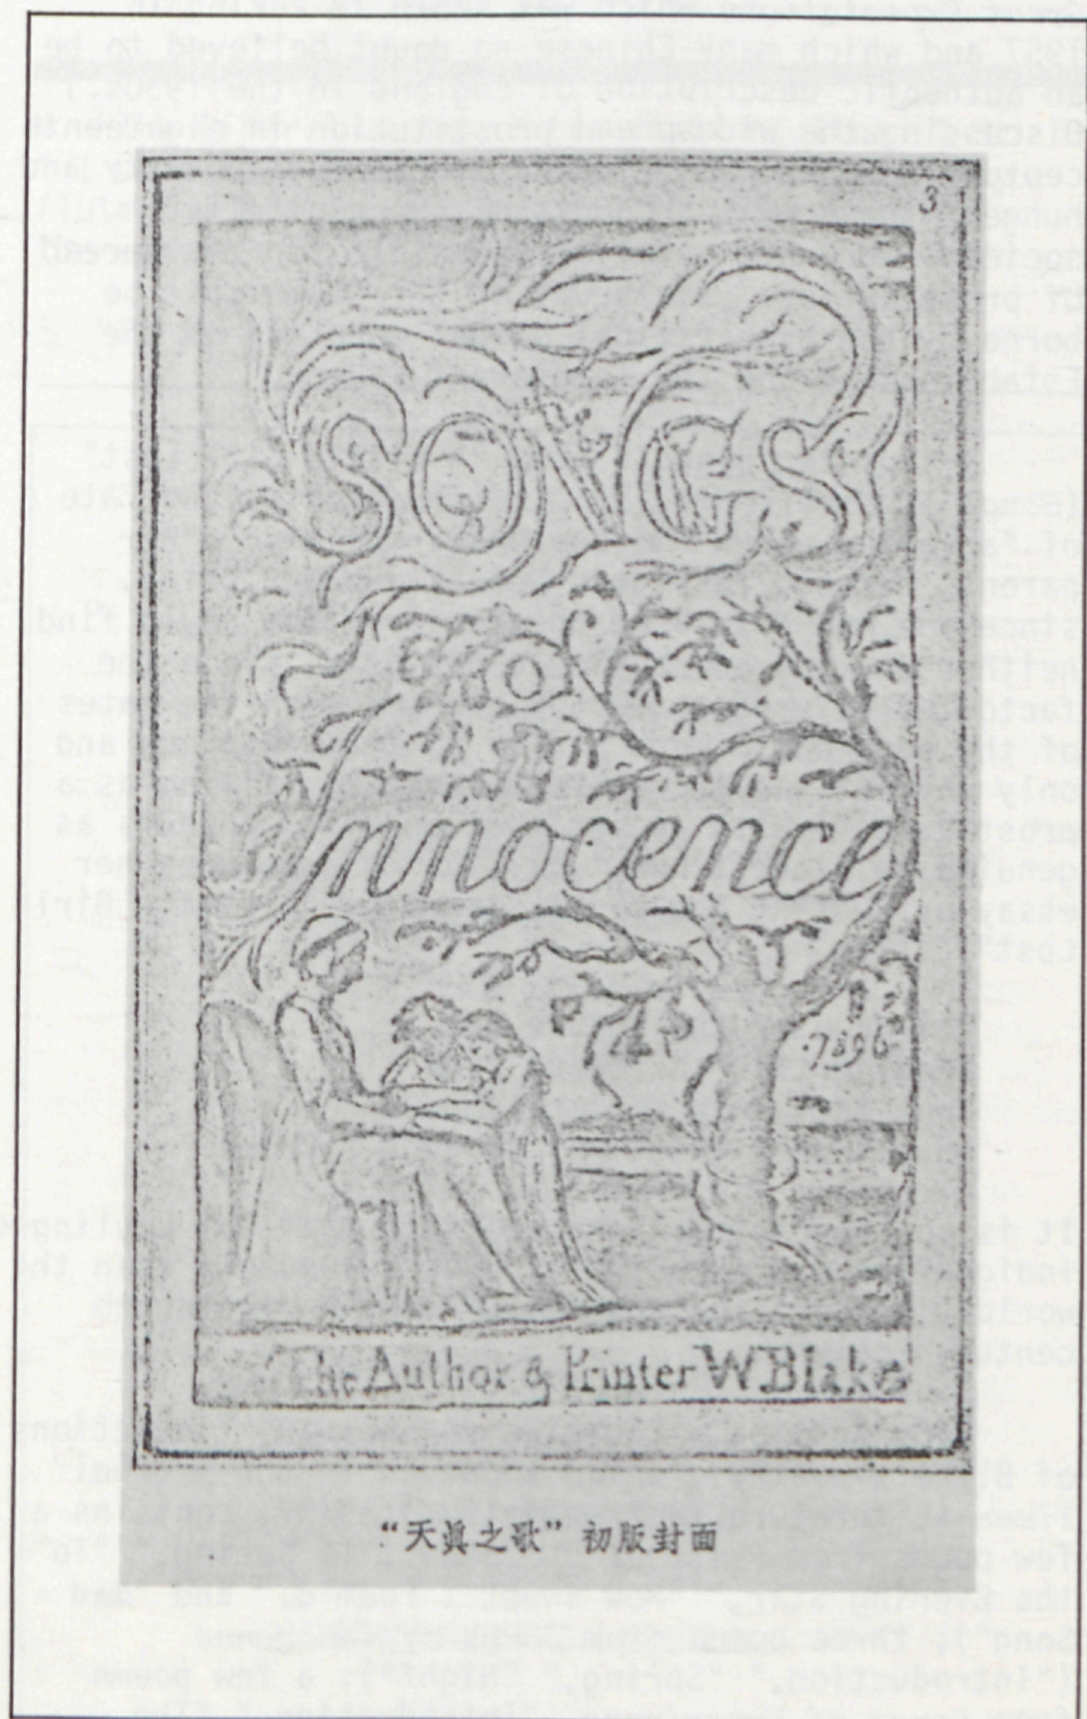 3
          
          SONGS
          of
          Innocence
          
          1789
          
          The Author & Printer W Blake
          
          “天真之歌” 初版封面